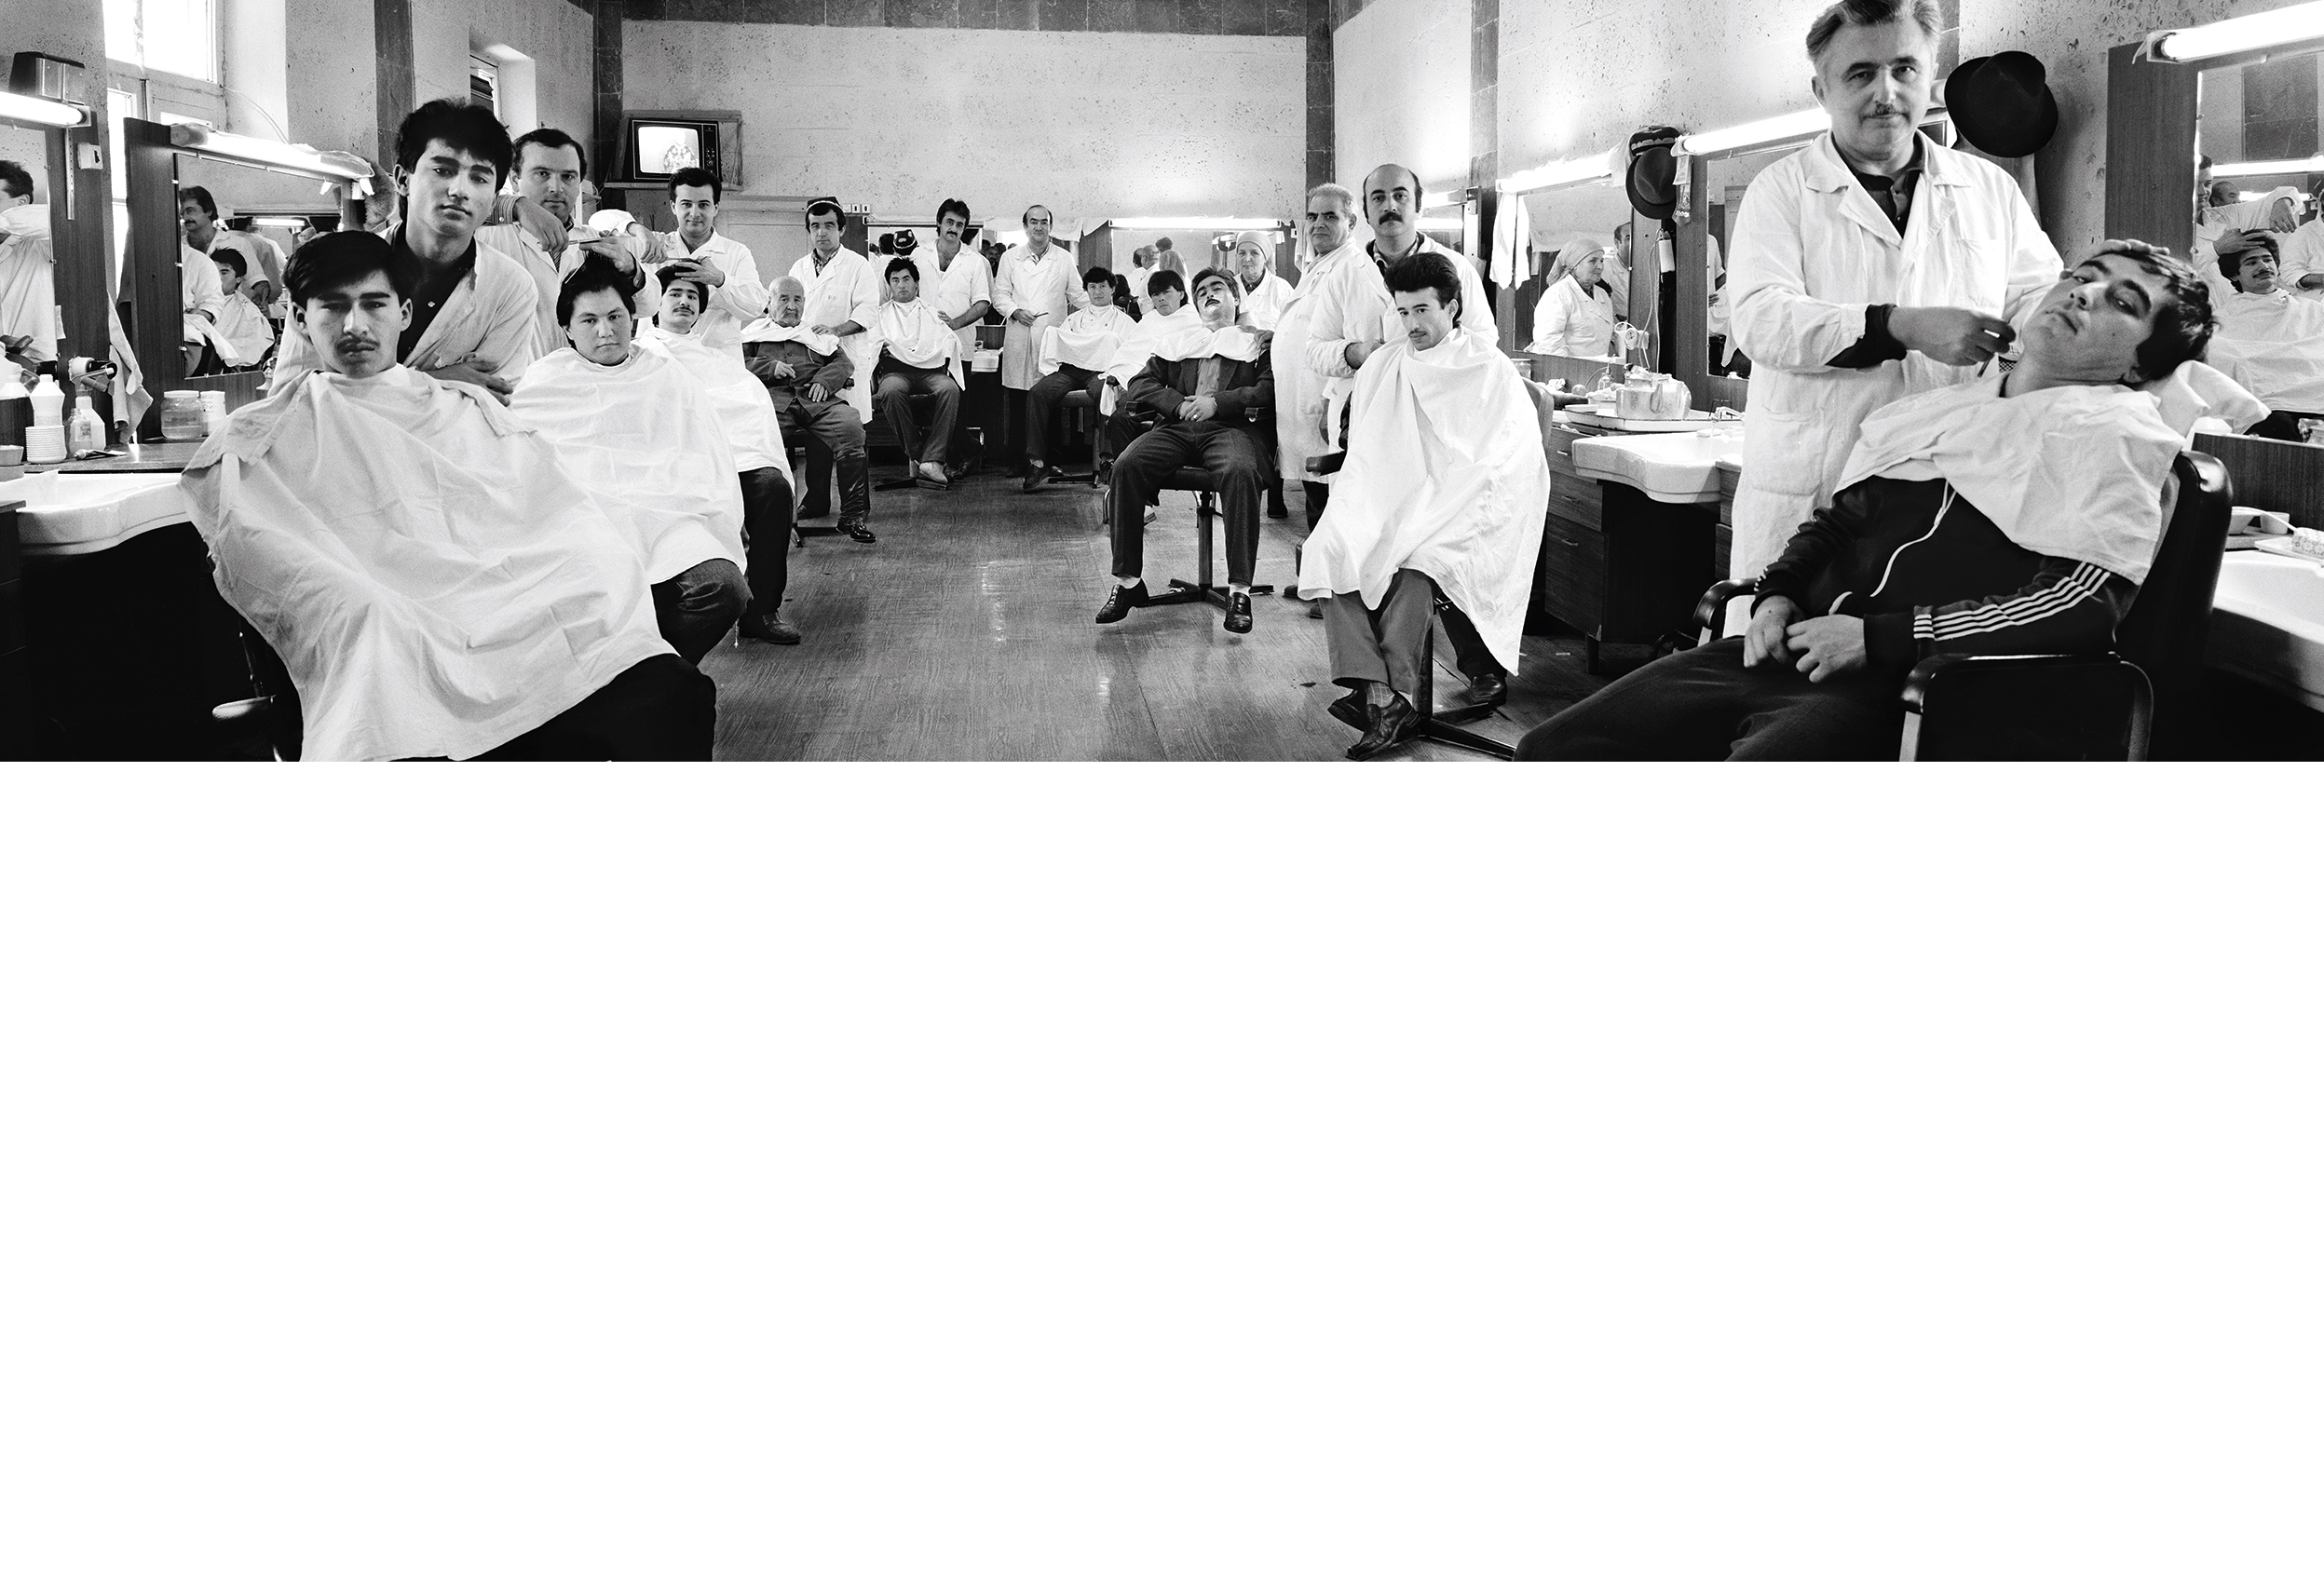  Barbershop, Leninabad, Tajikistan, 1989 